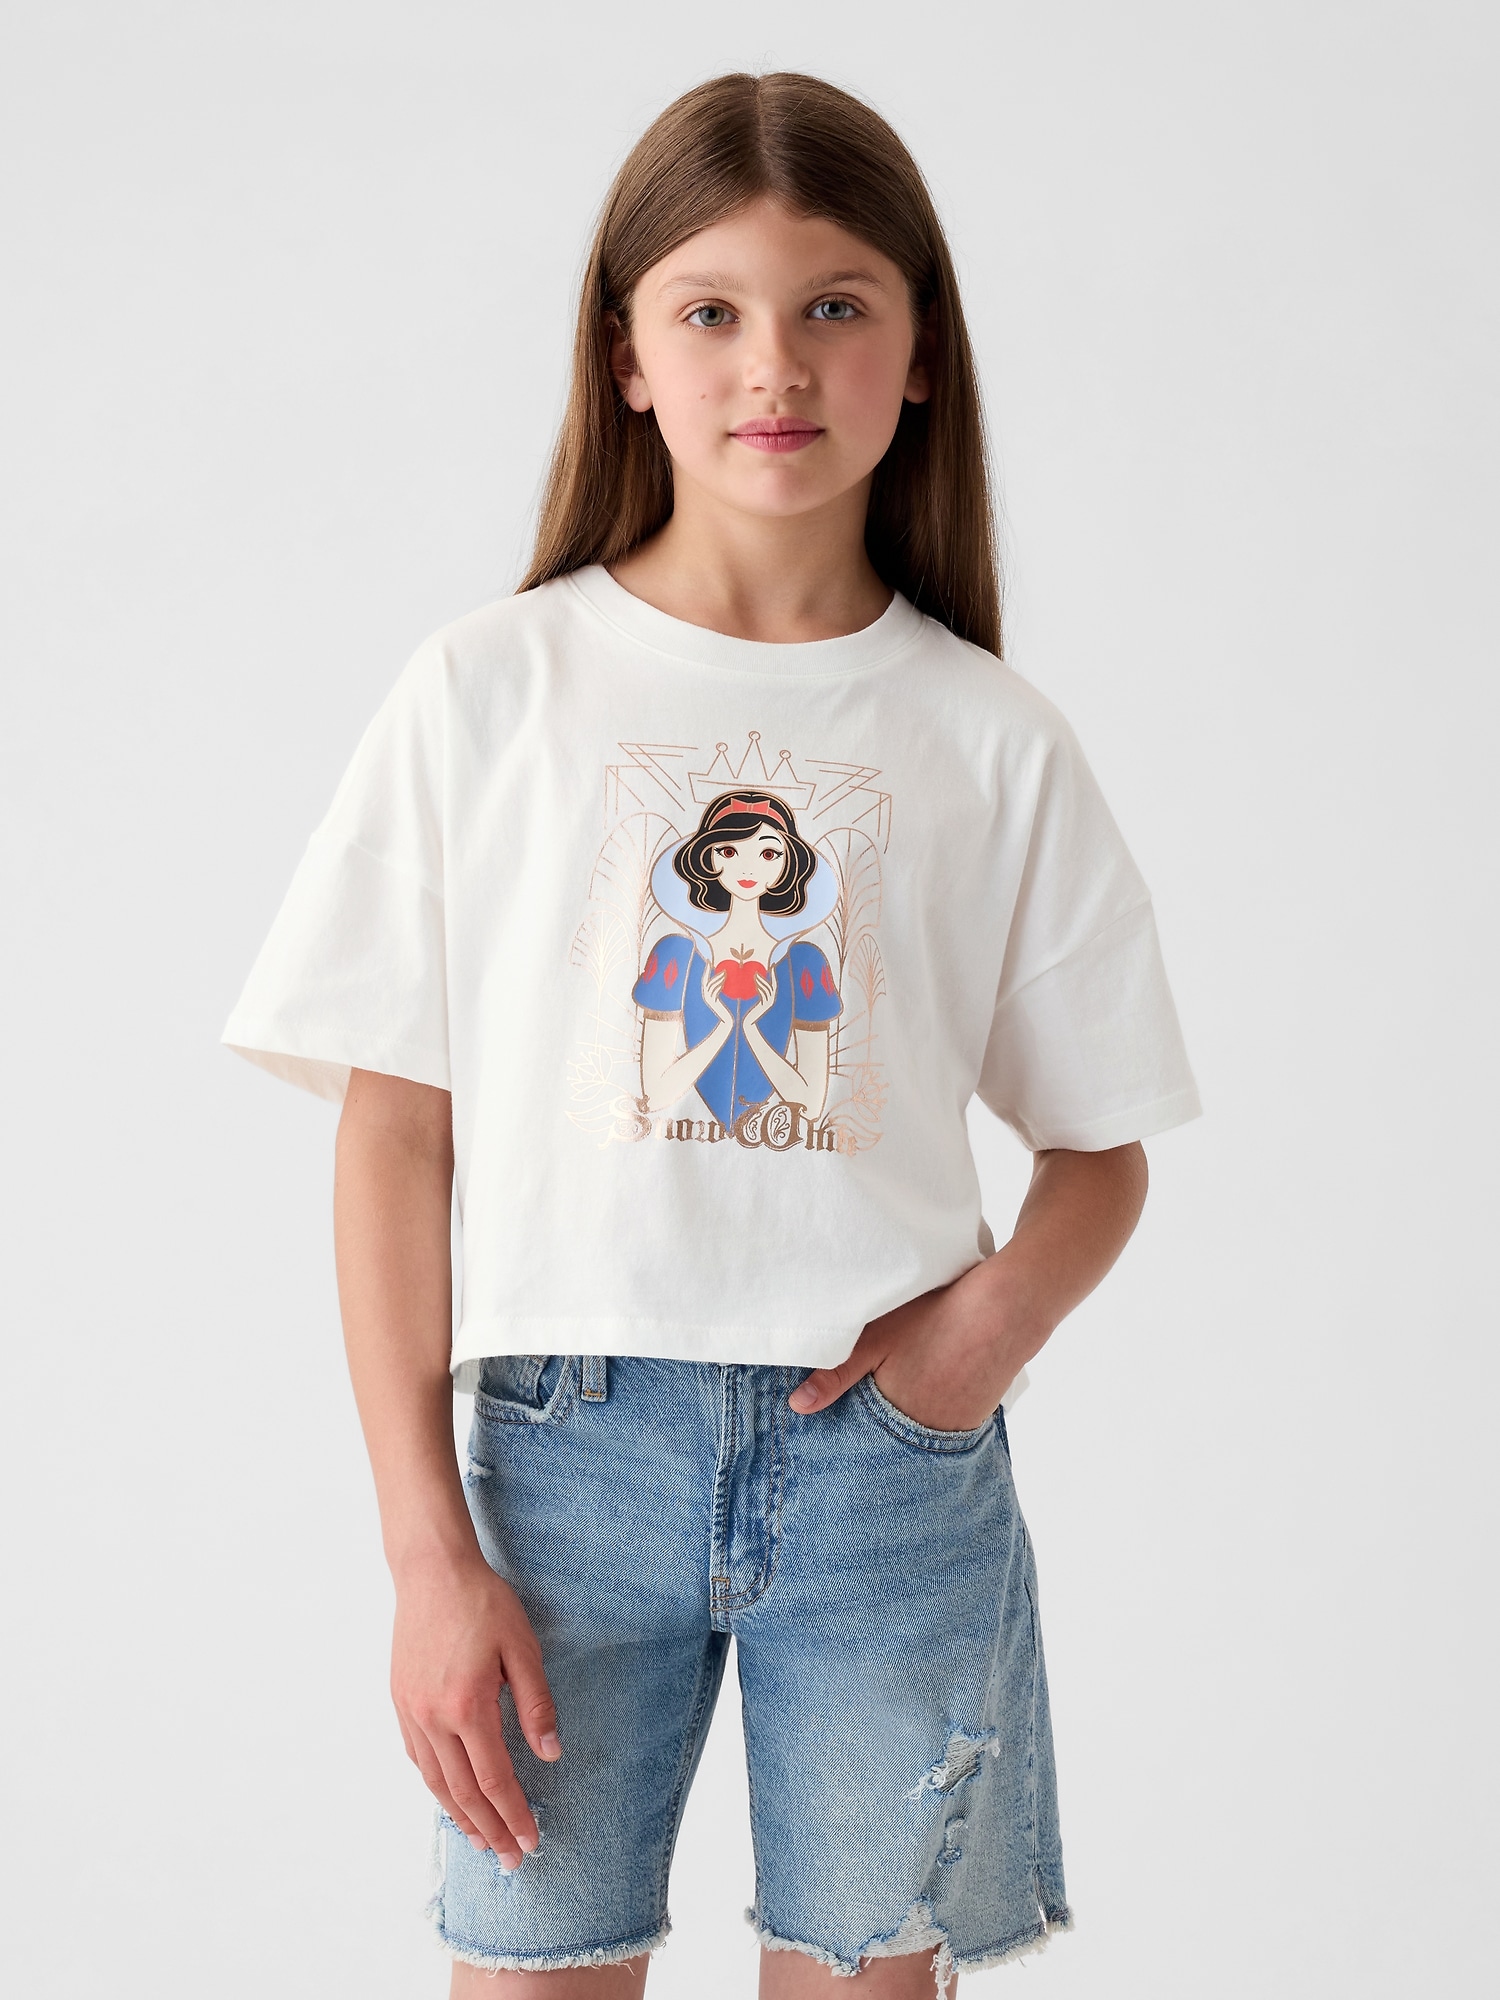 GapKids | Disney Graphic T-Shirt